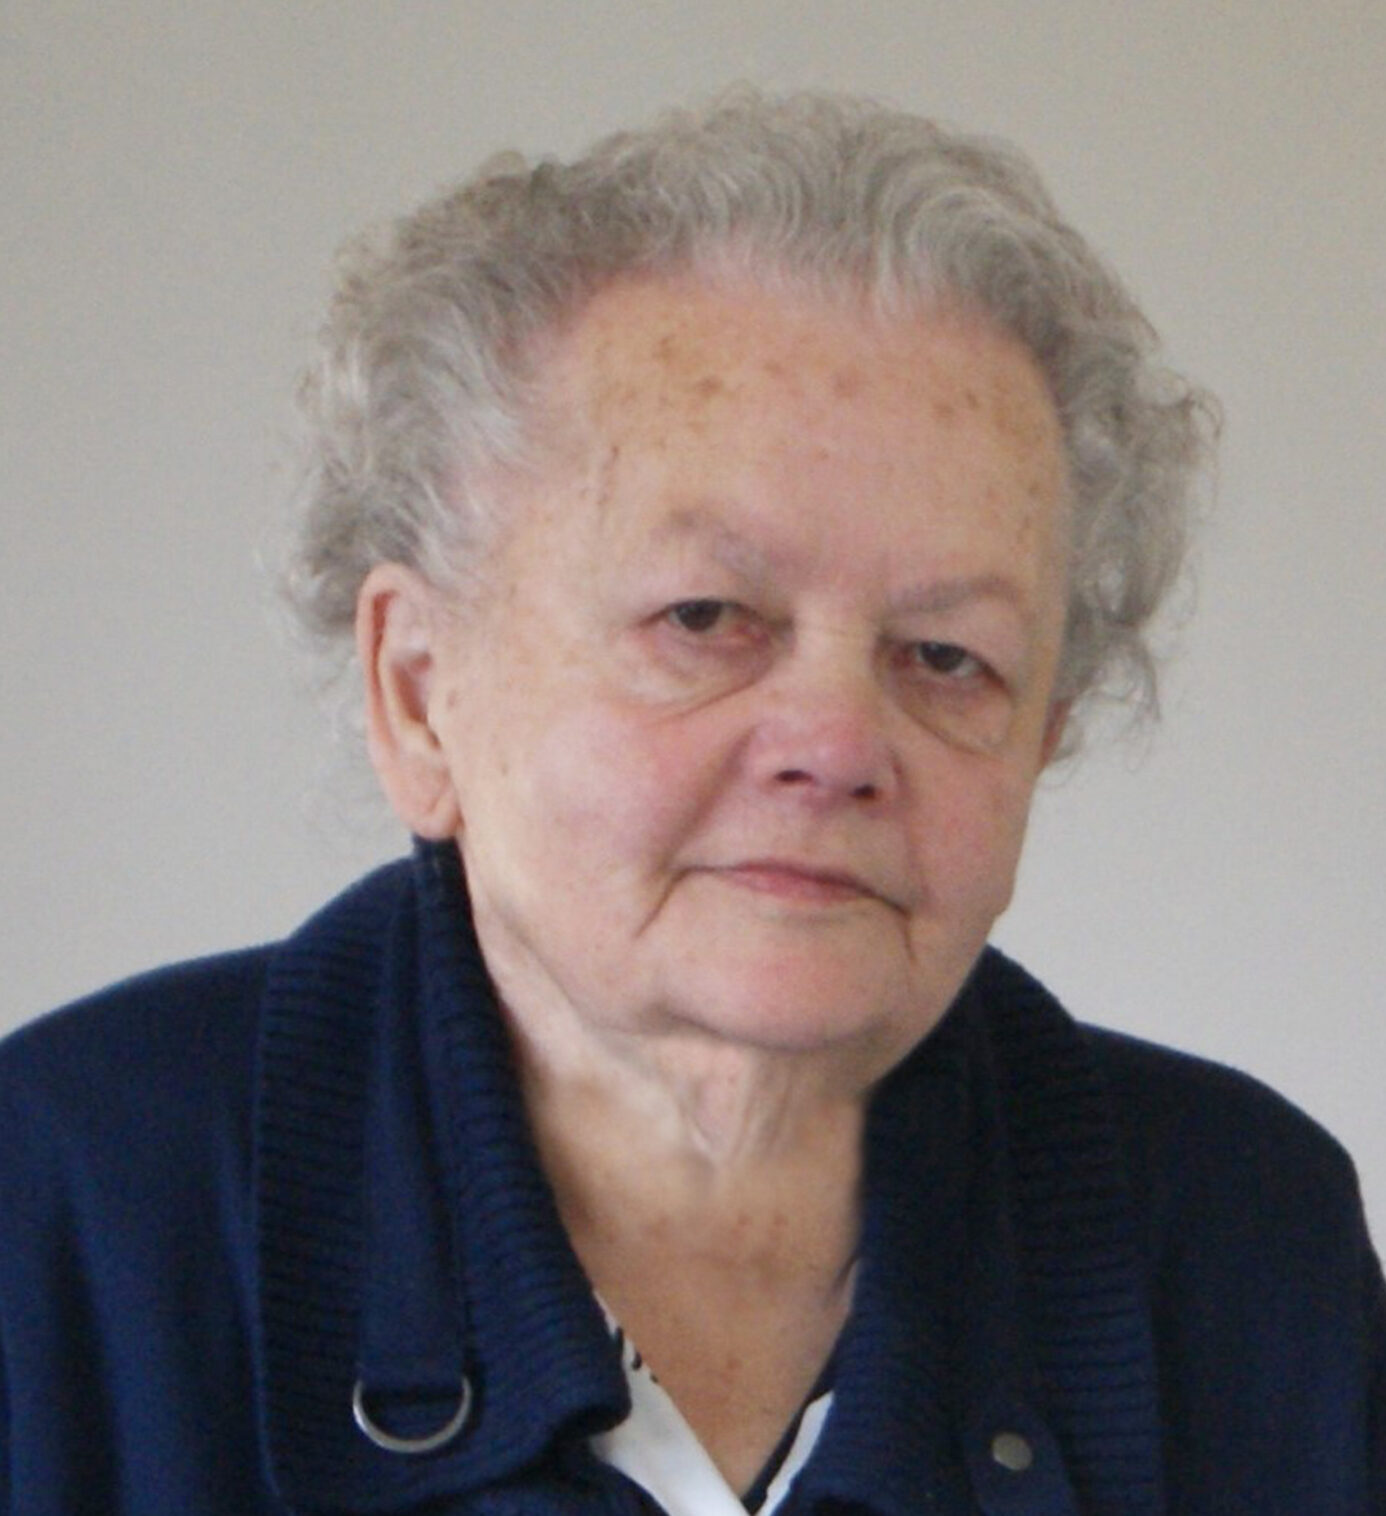 Maria Coenen